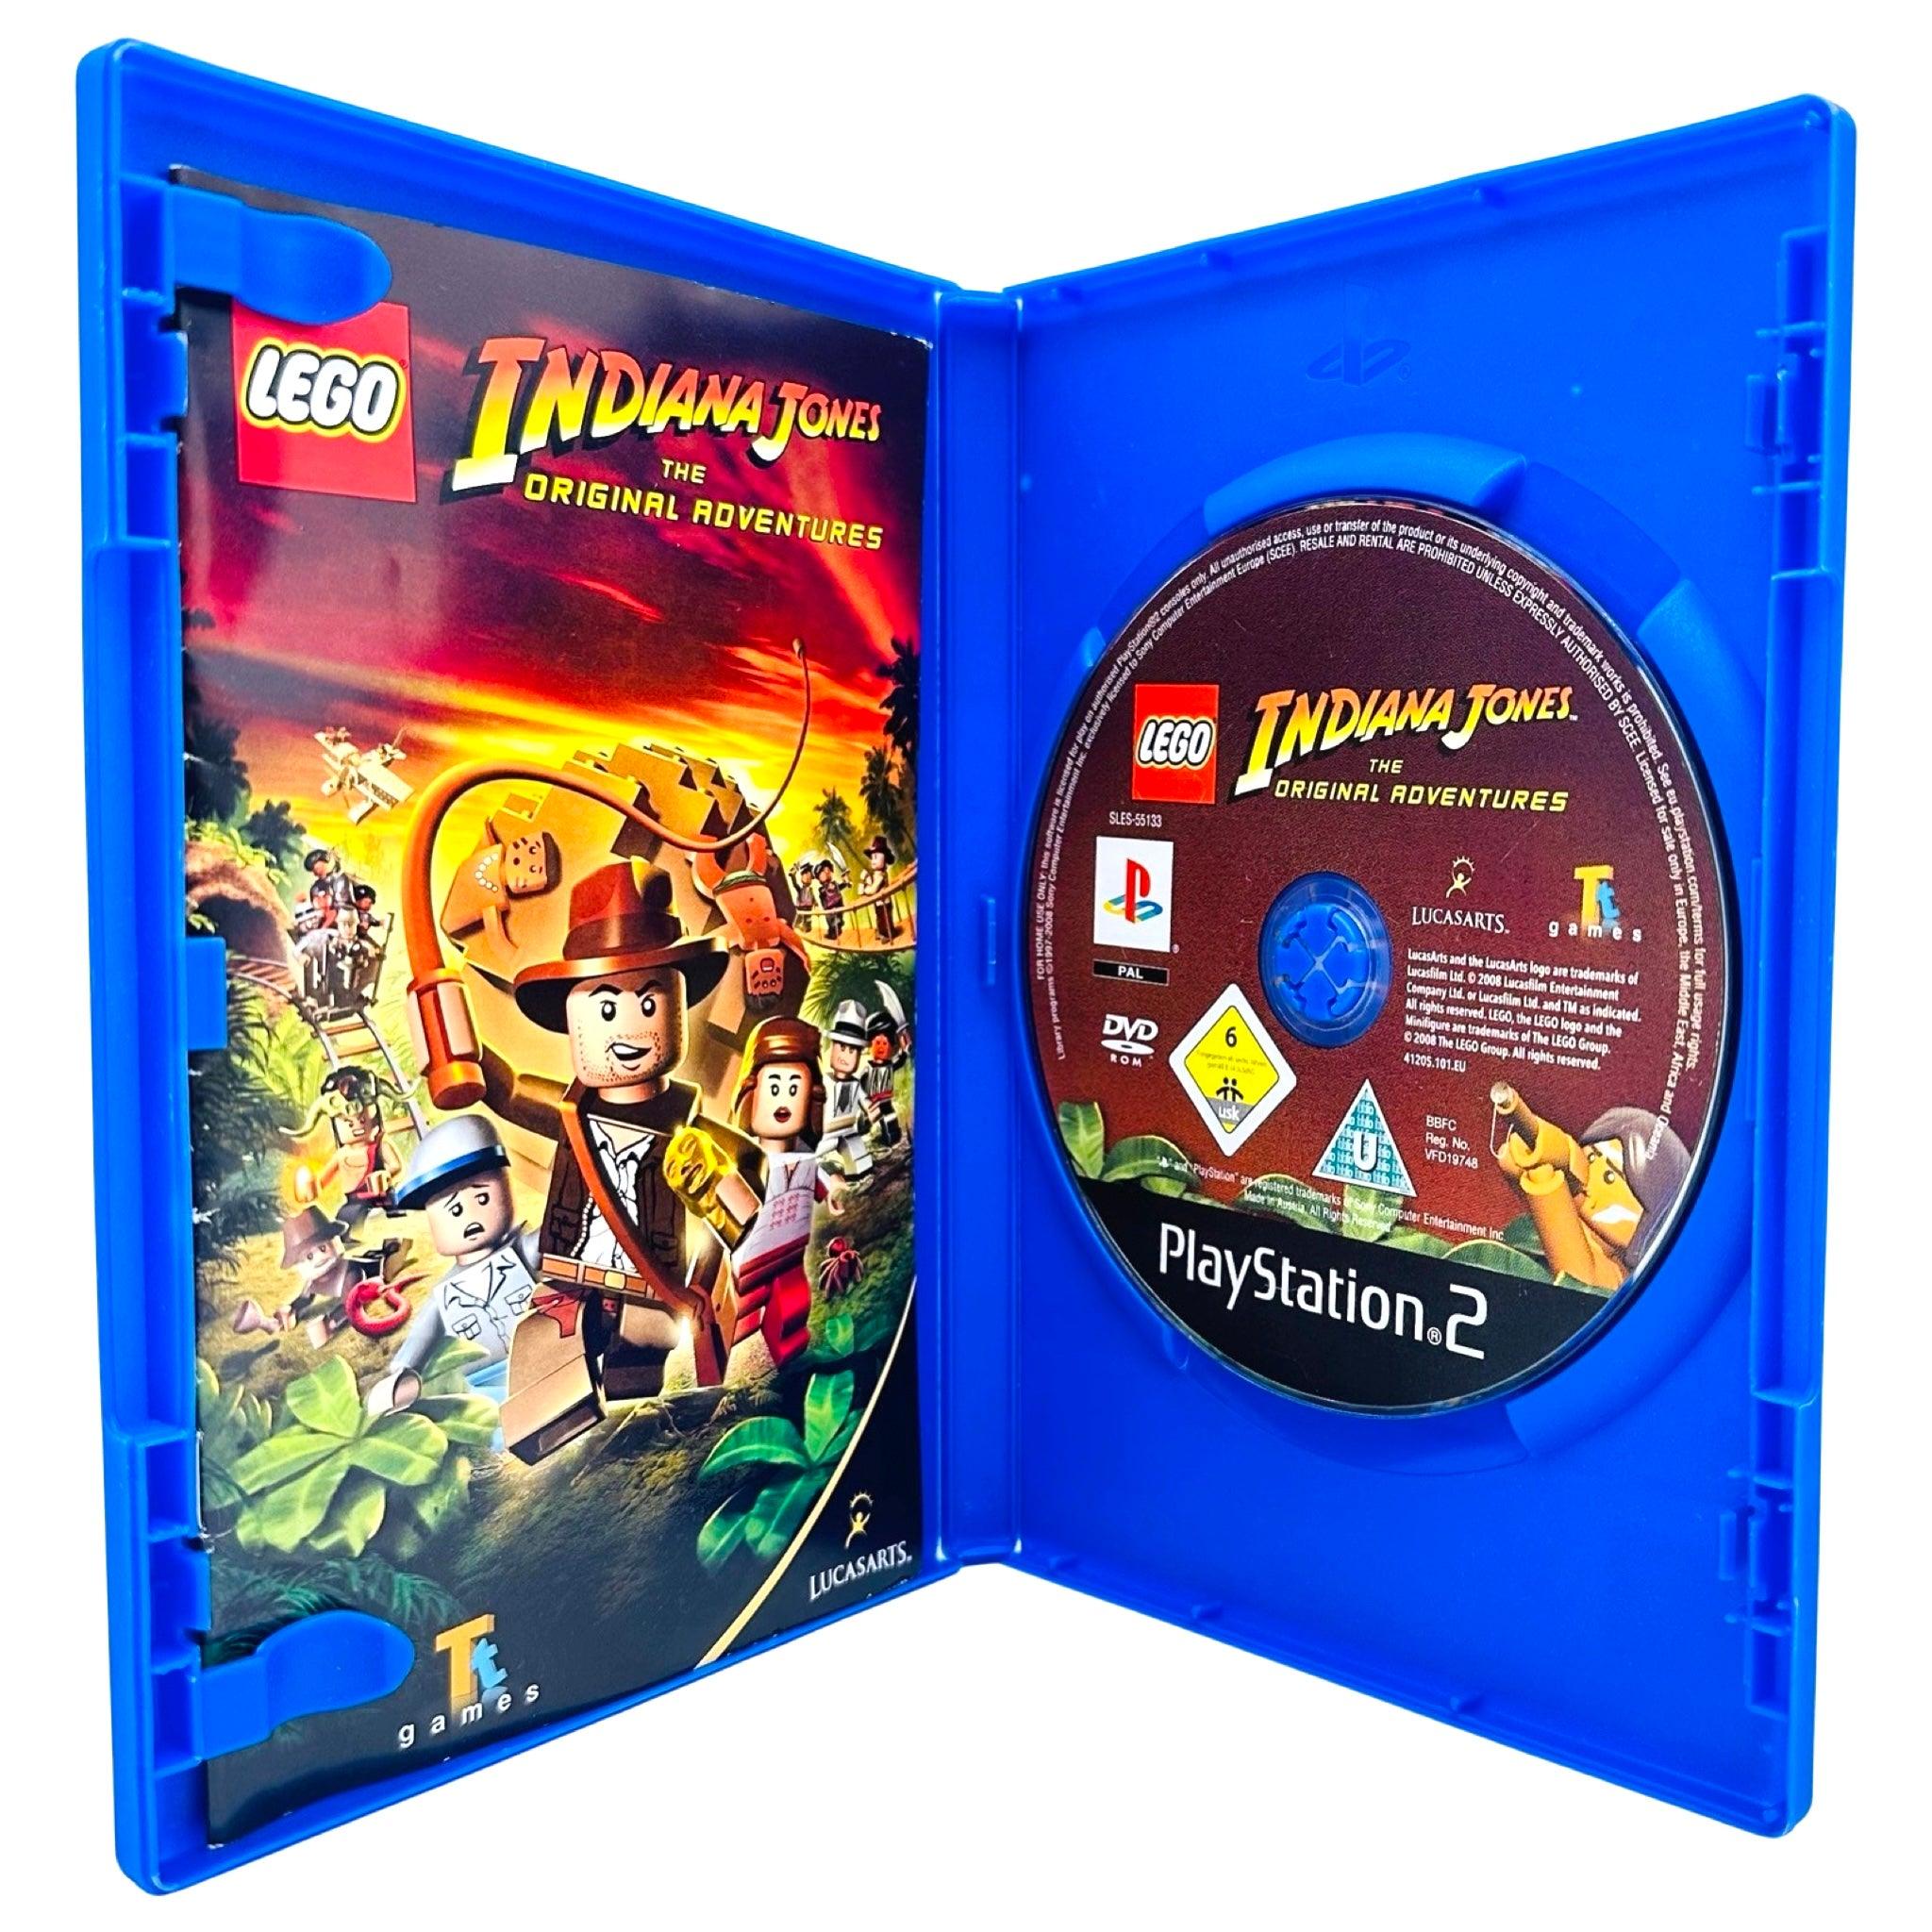 PS2: LEGO Indiana Jones: The Original Adventures - RetroGaming.no